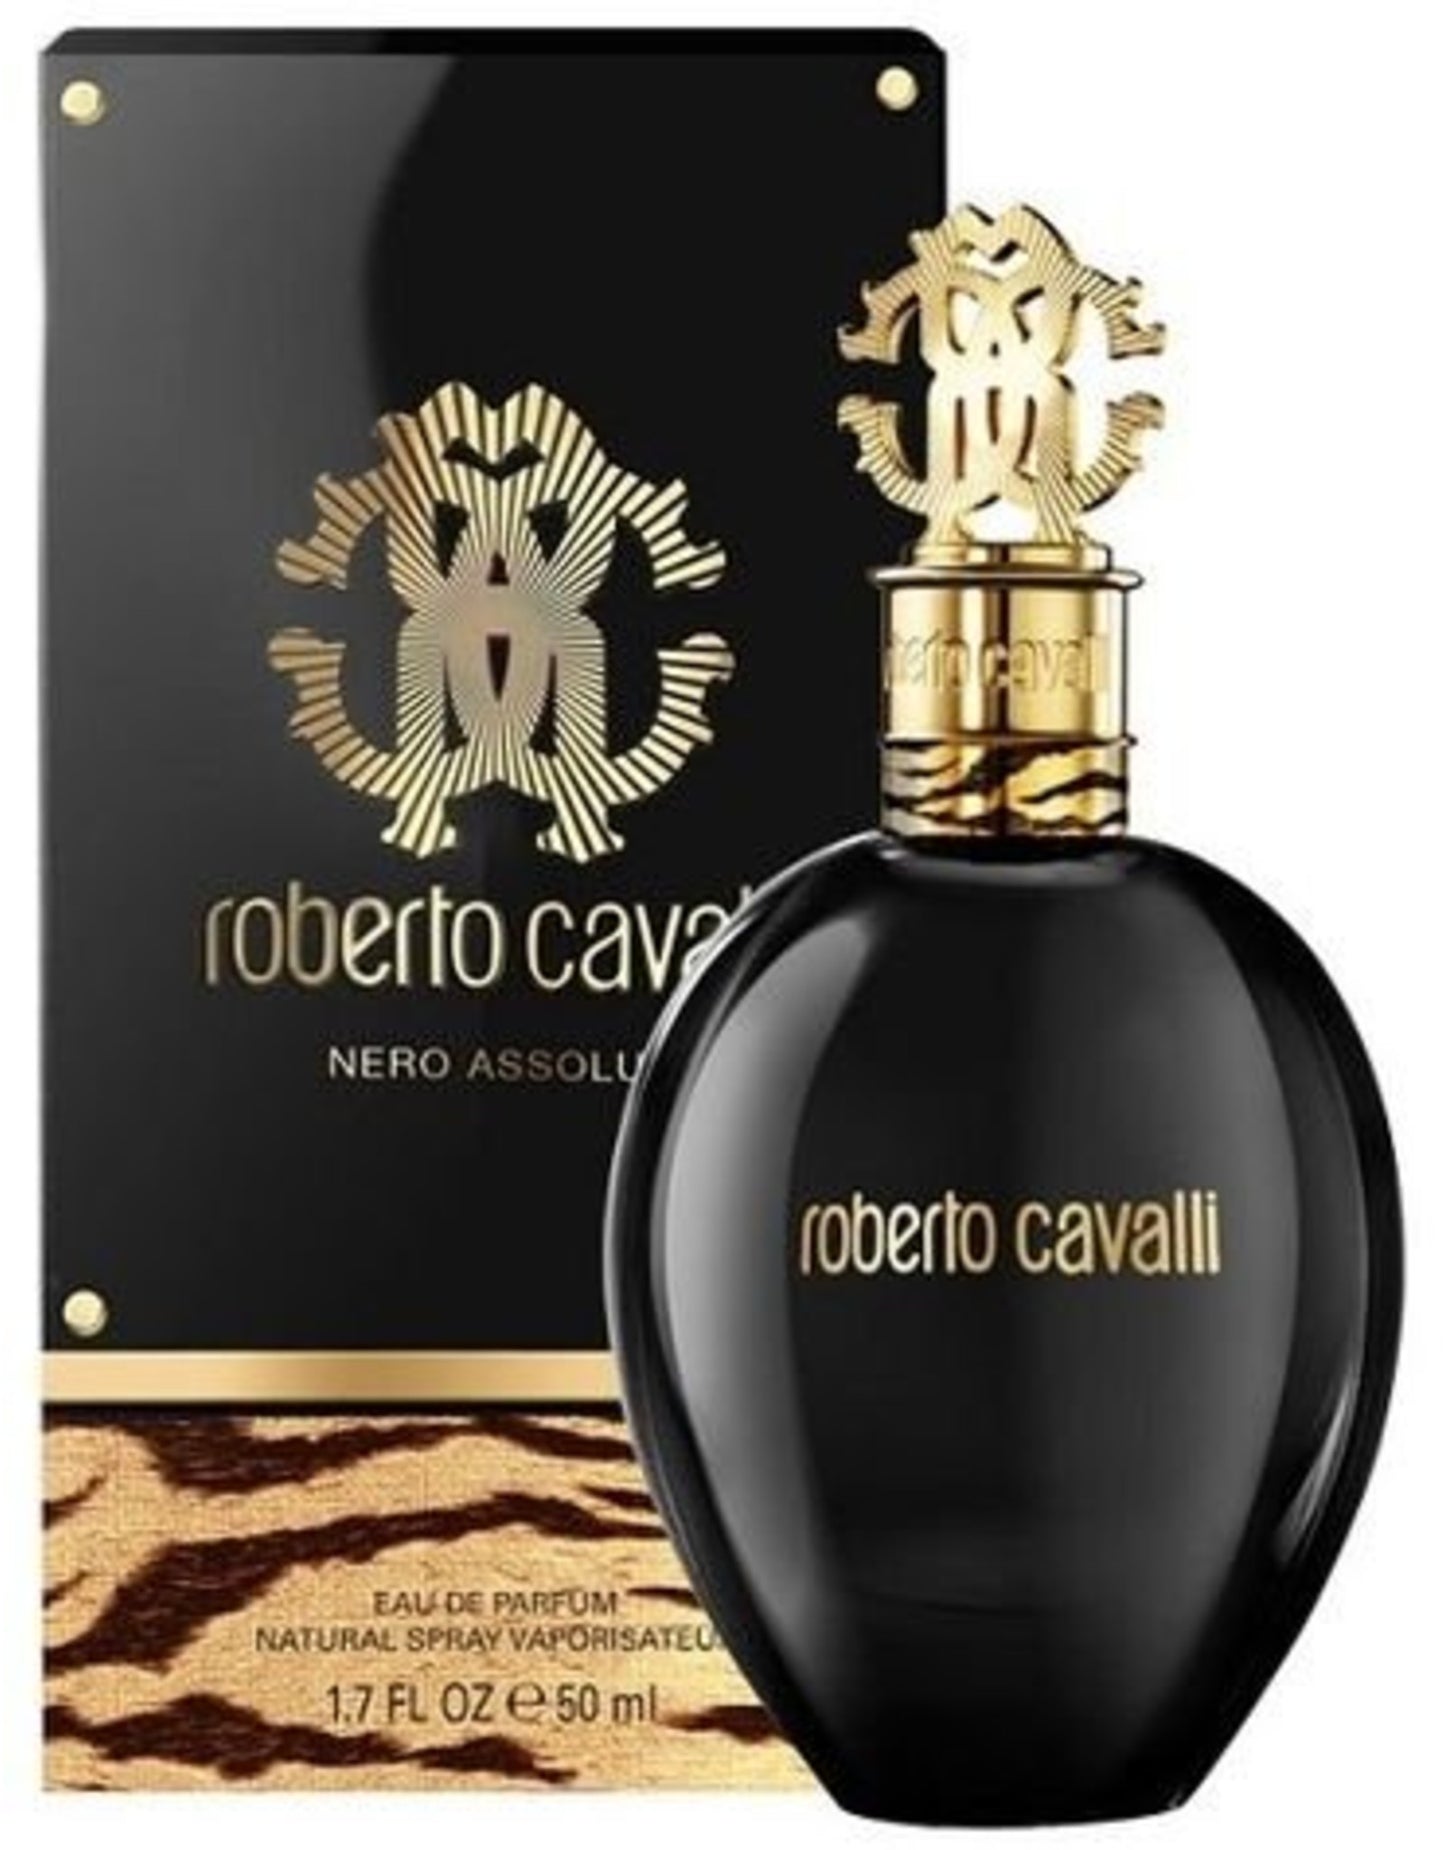 Roberto Cavalli Nero Assoluto Eau de Parfum